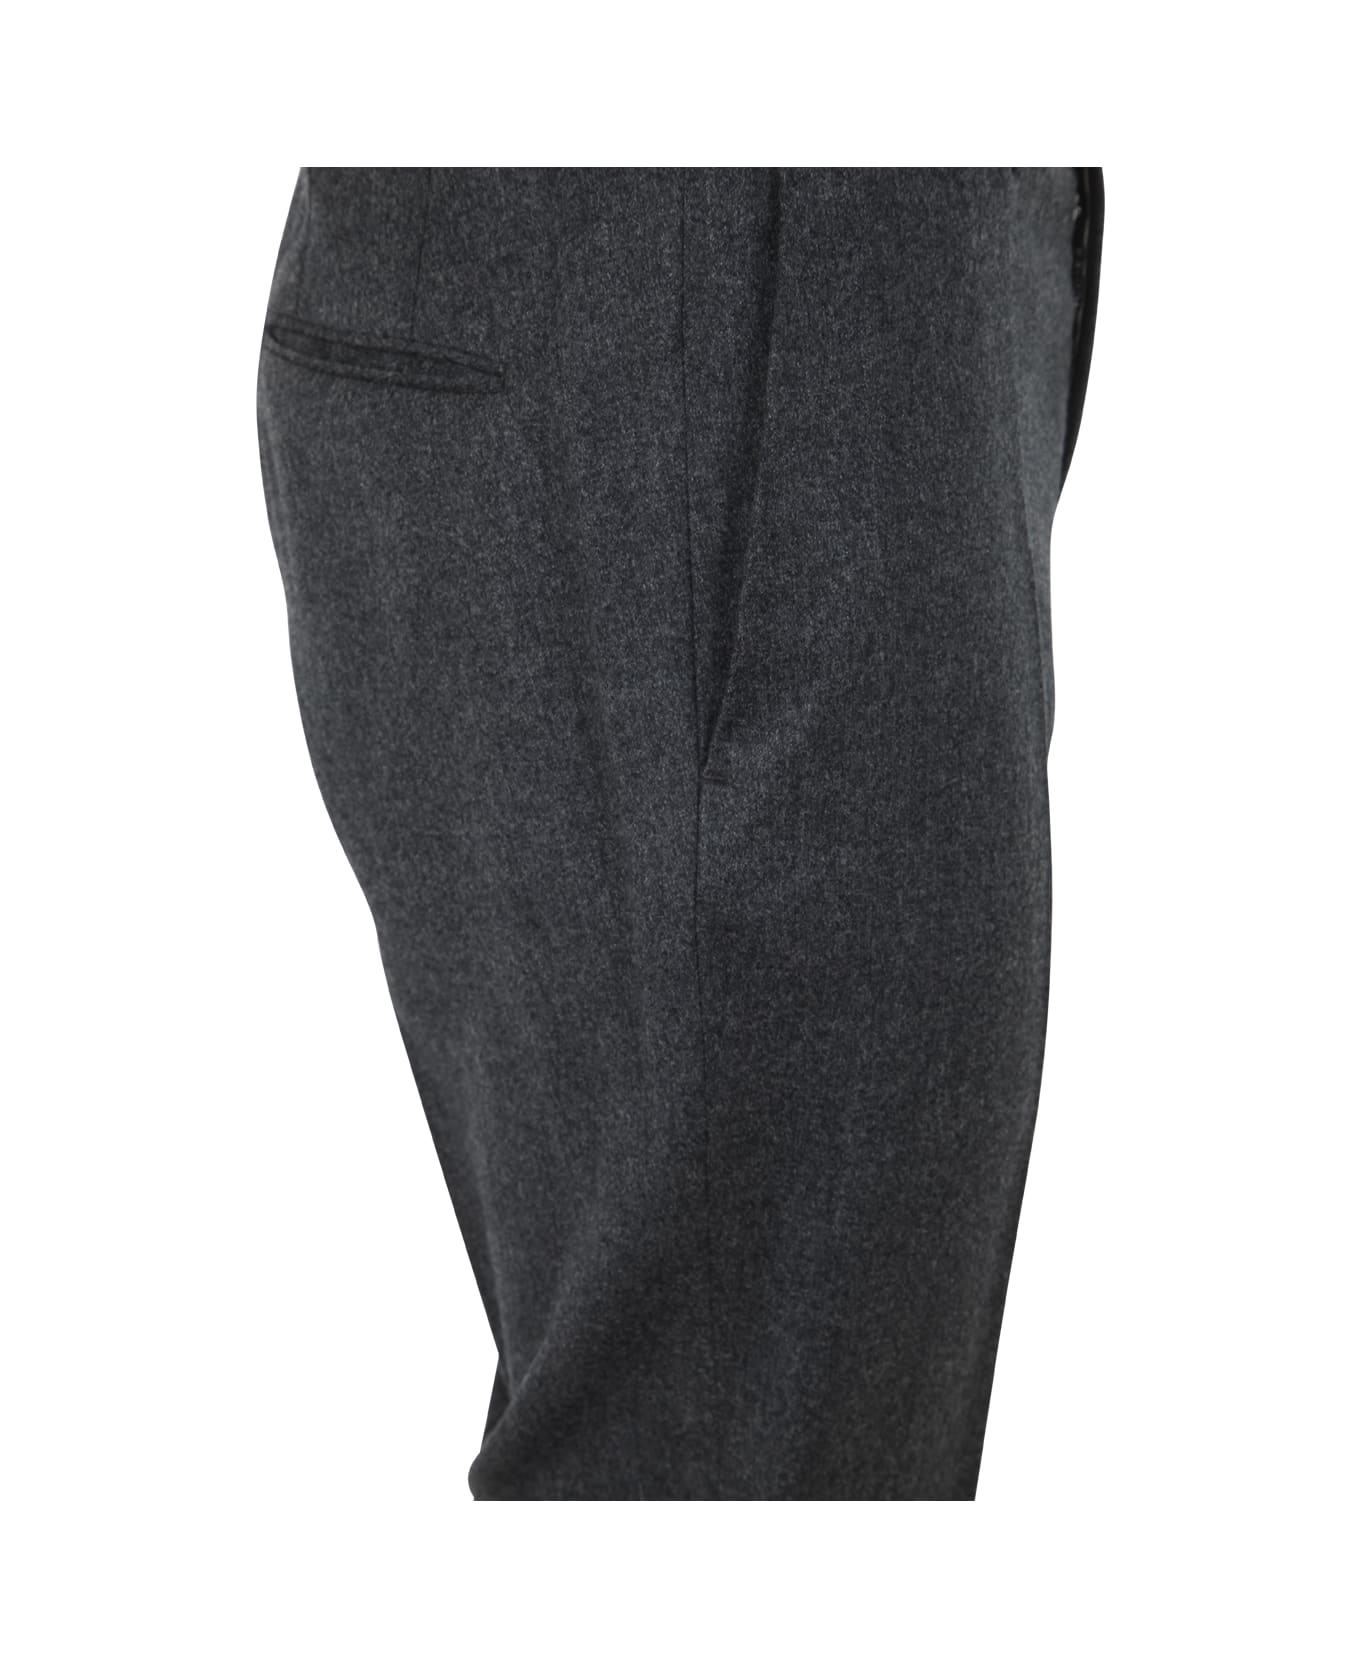 Incotex Smart Flannel Trousers - Medium Grey ボトムス